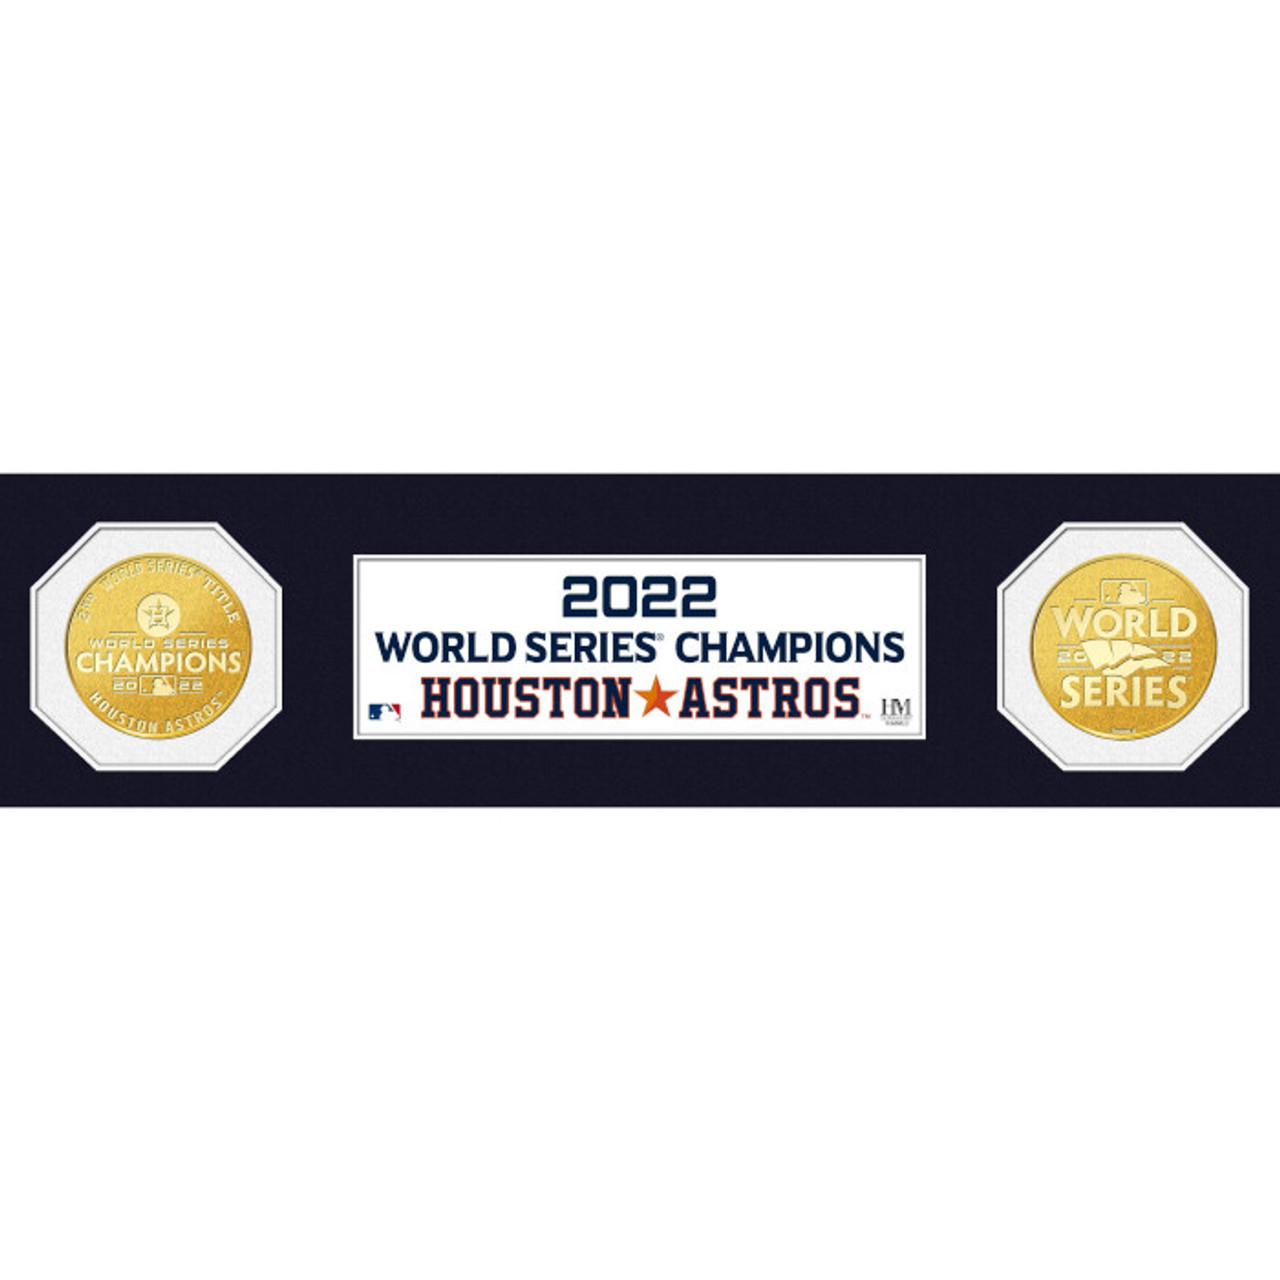 2022 world series champions logo